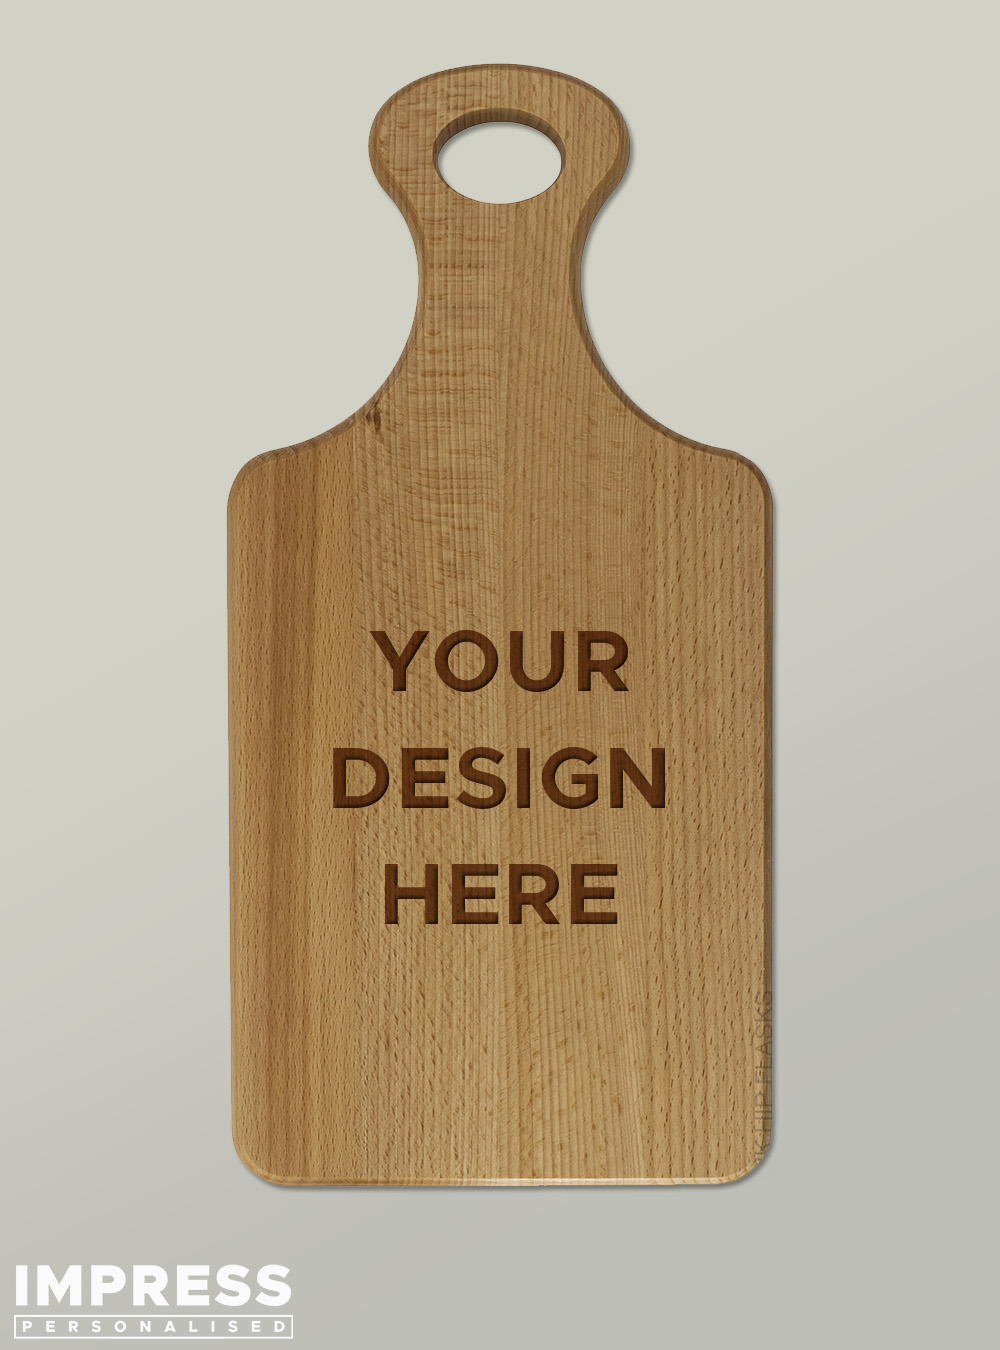 https://impresspersonalised.com/wp-content/uploads/2021/07/Wooden-Paddle-Board-blank.jpg